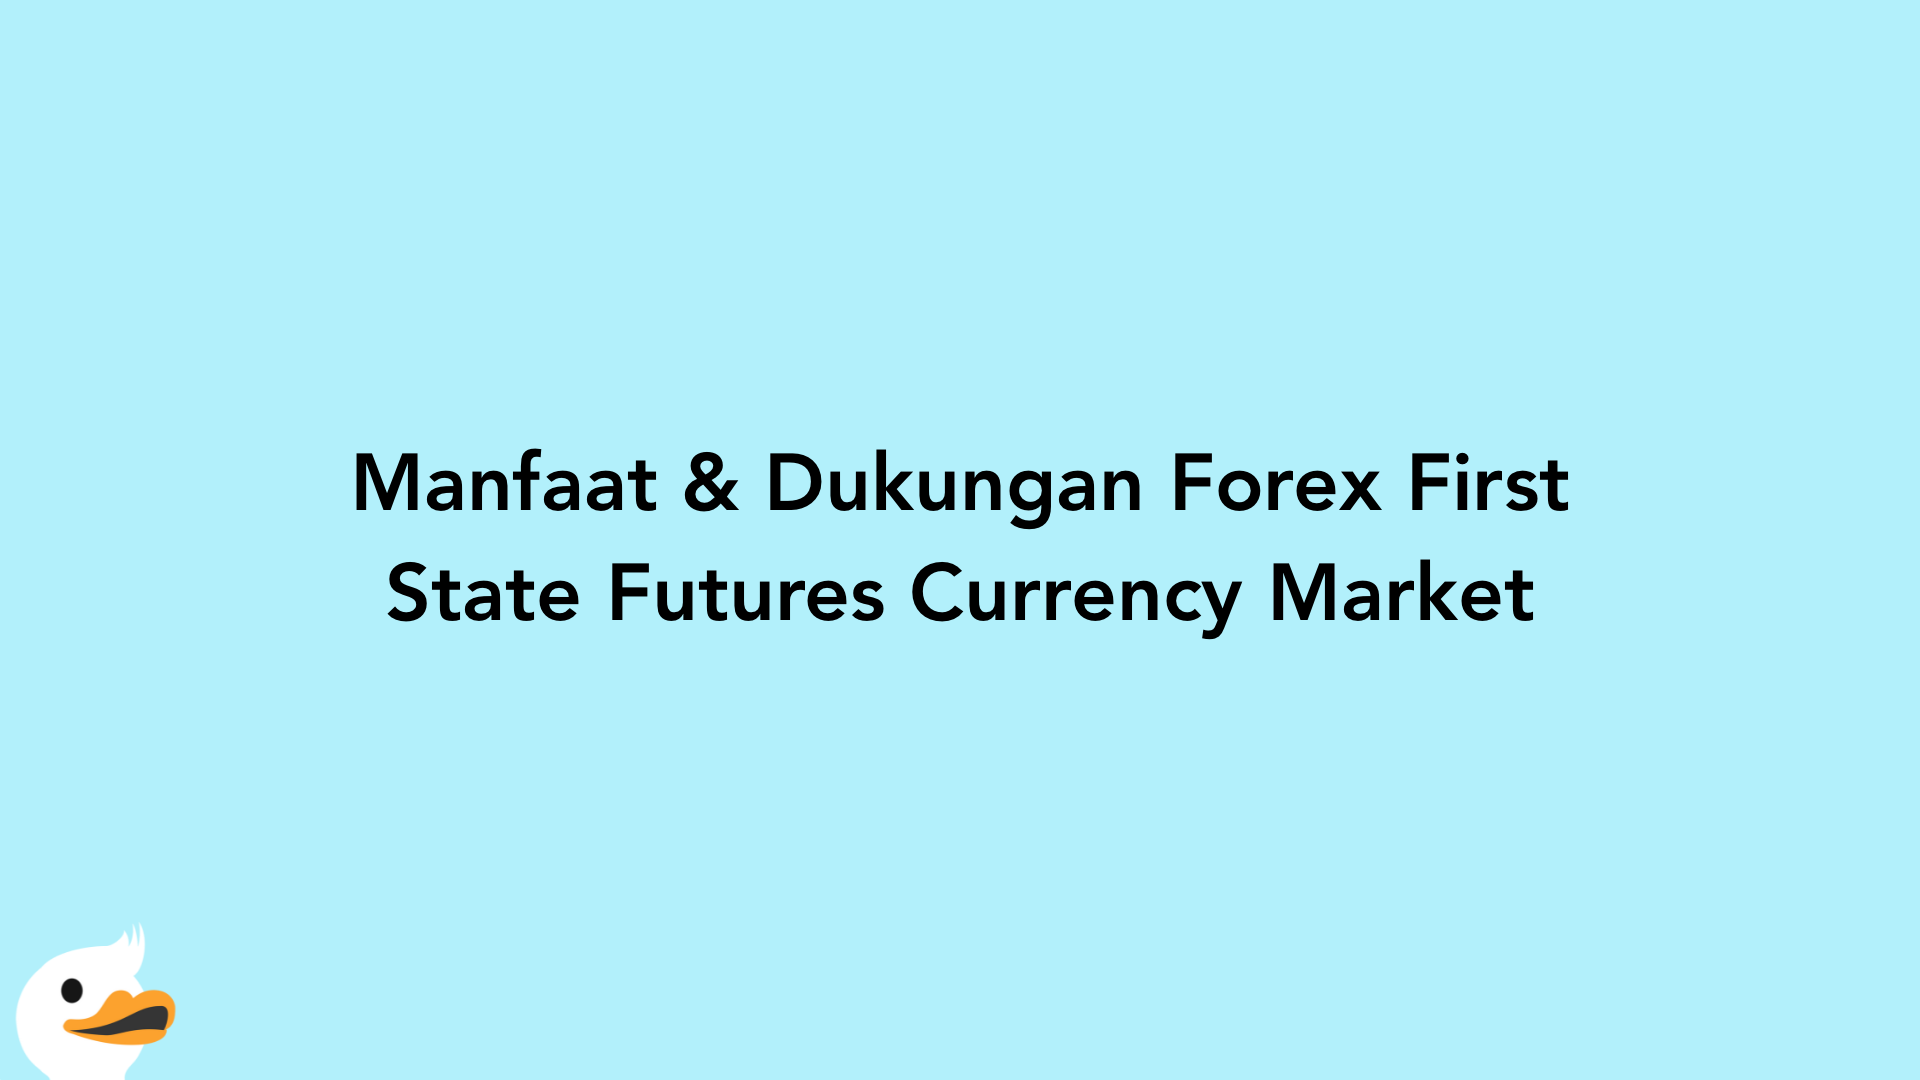 Manfaat & Dukungan Forex First State Futures Currency Market